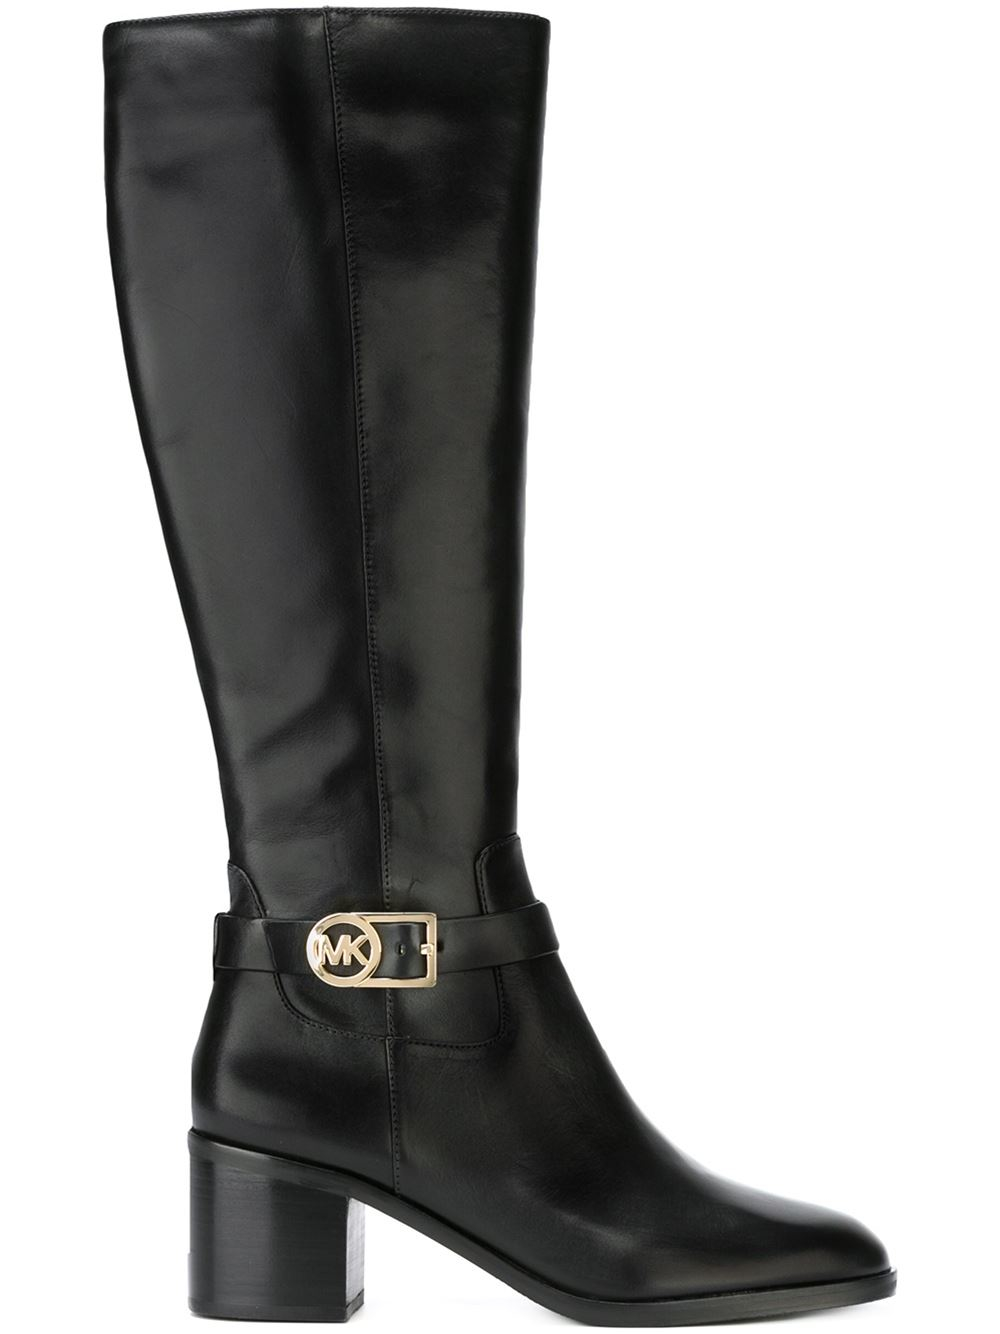 Lyst - MICHAEL Michael Kors Mid Chunky Heel Boots in Black